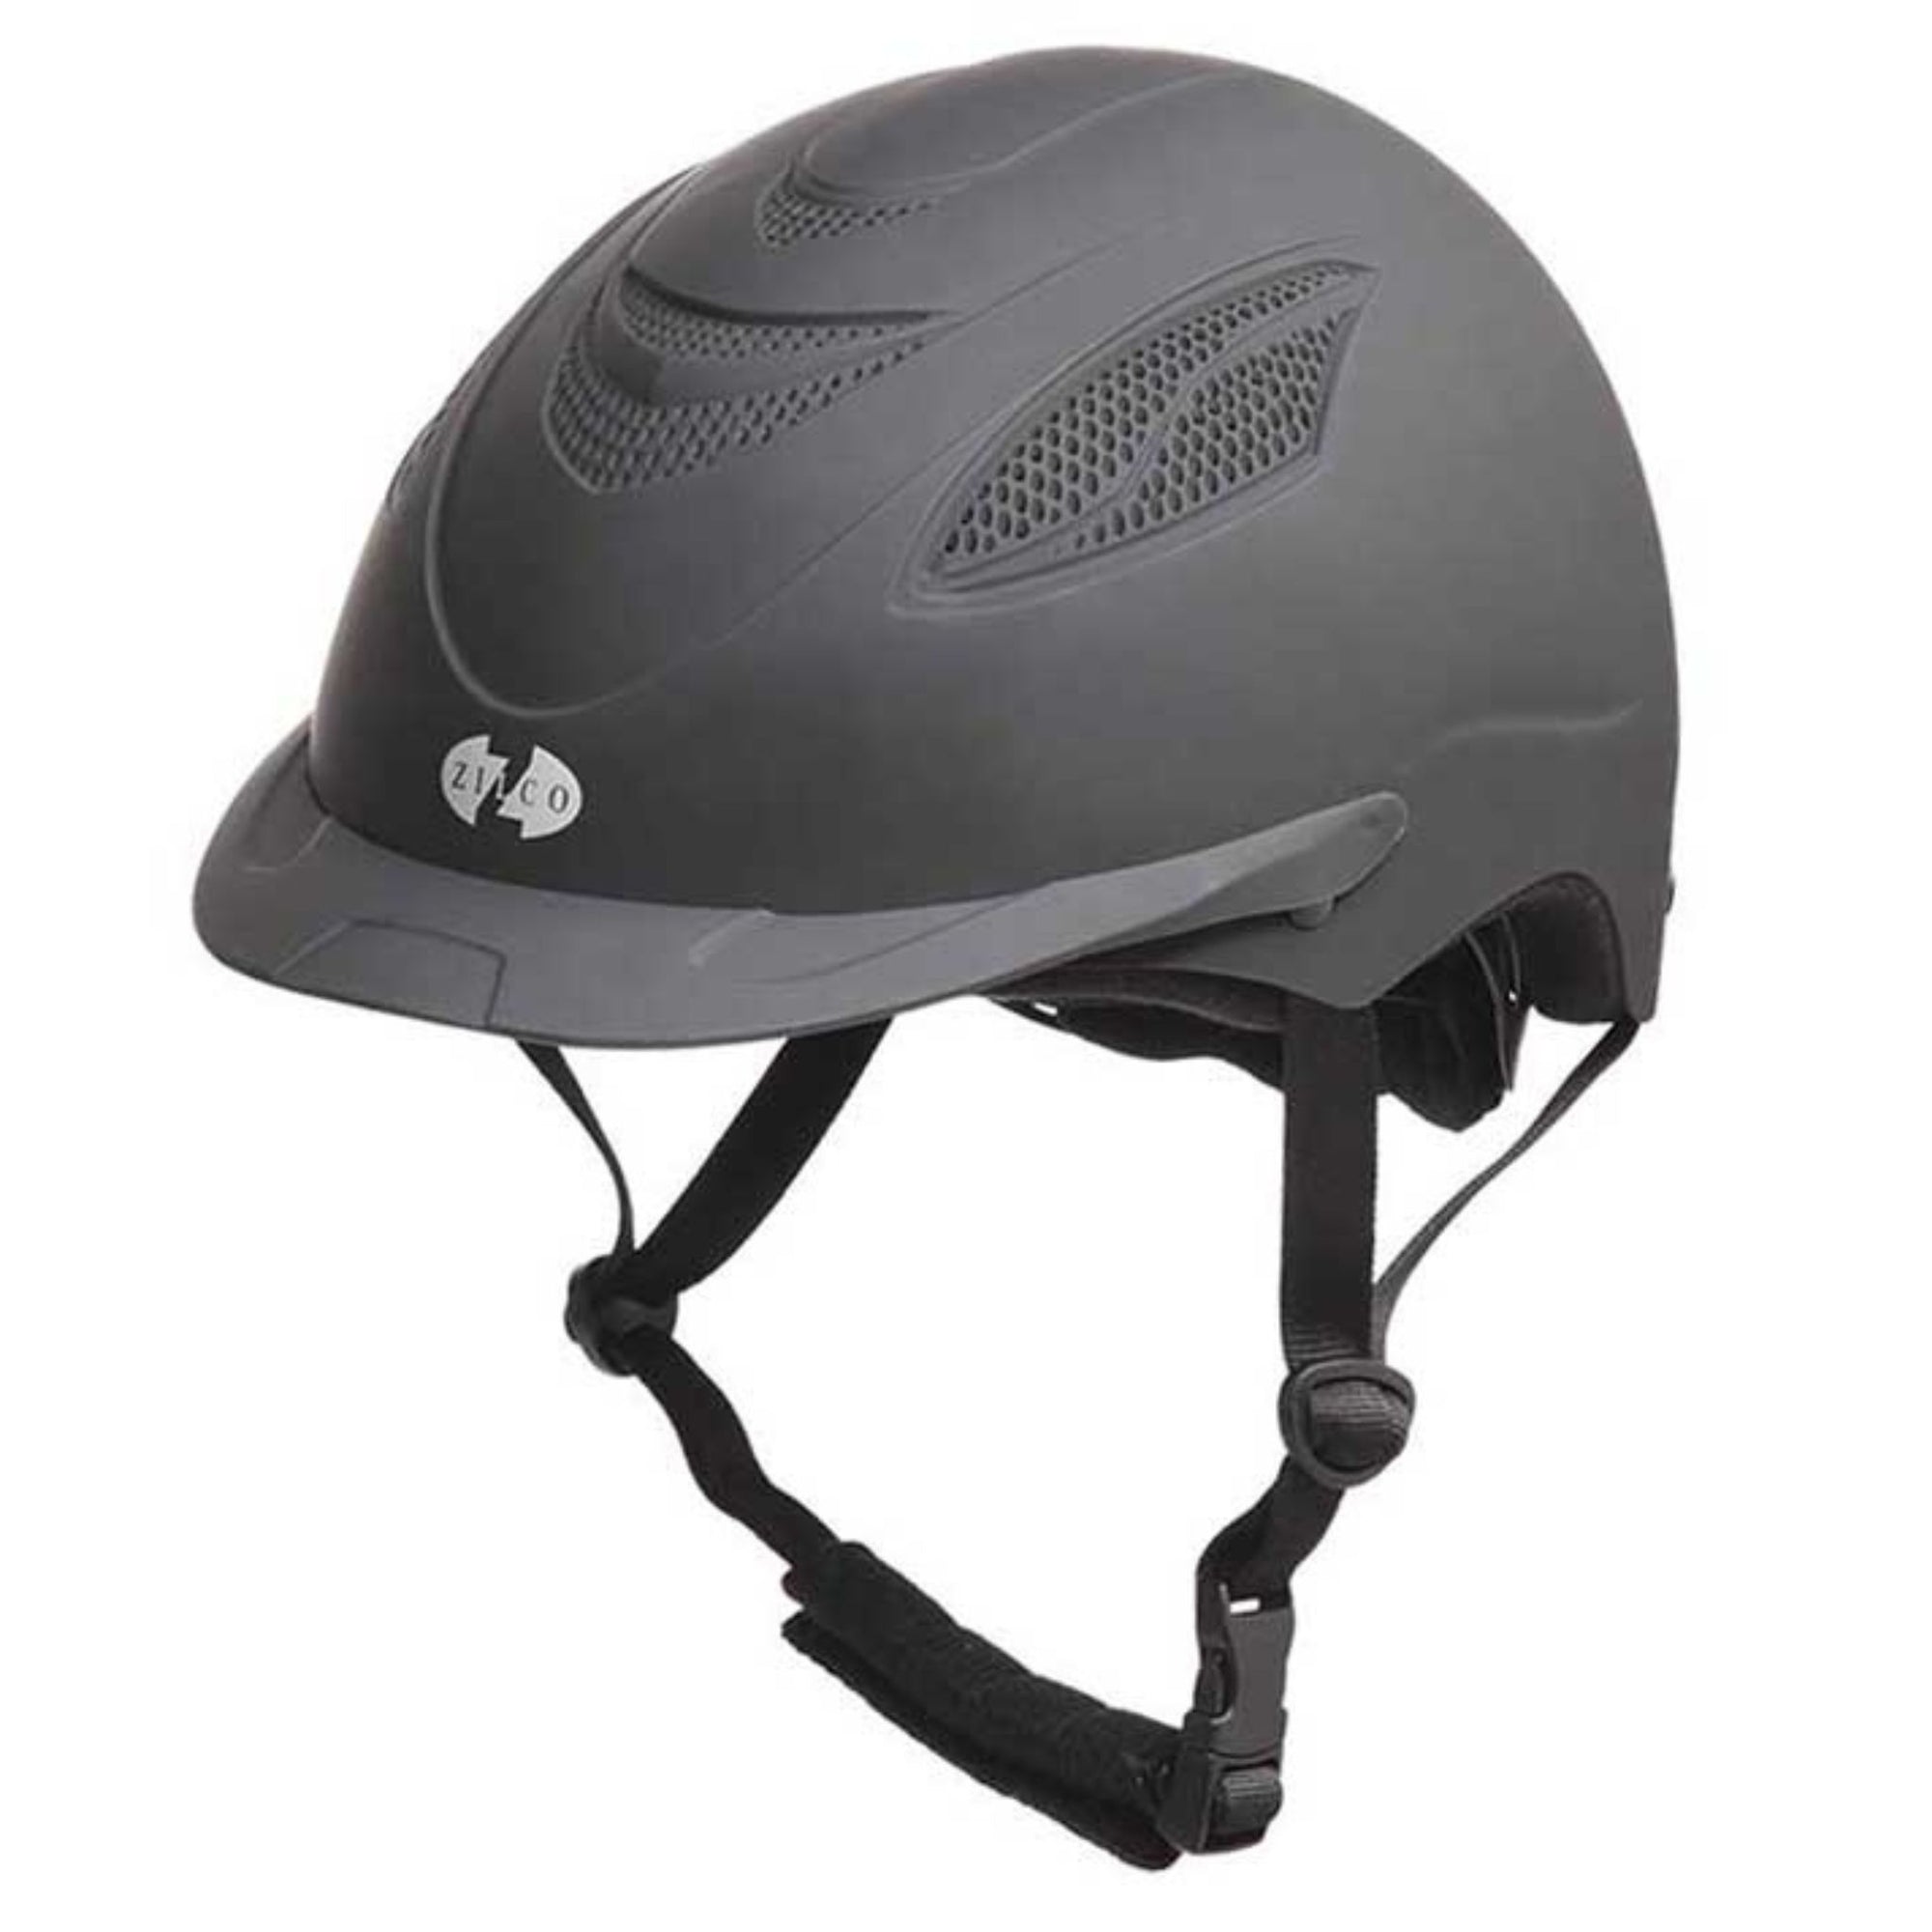 Black Helmet with zilco logo 